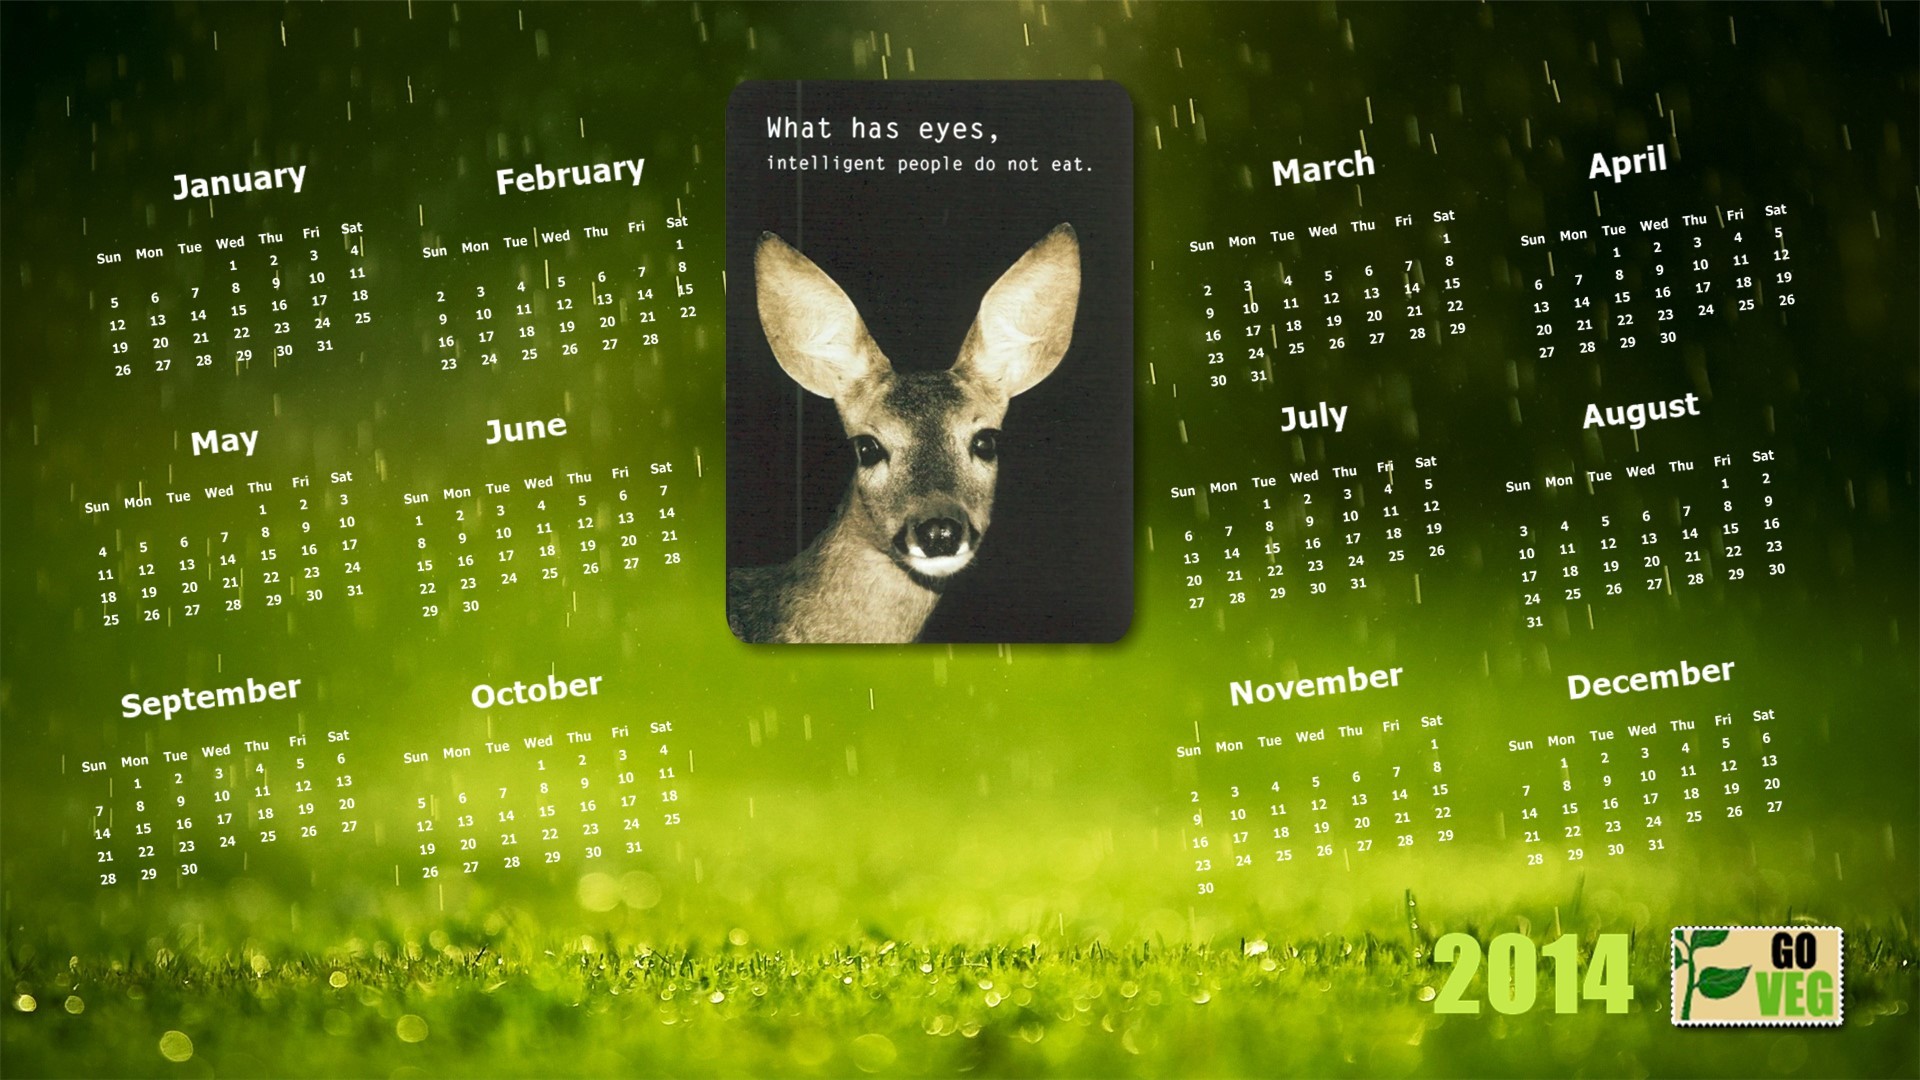 2014 vegan calendar HD Wallpaper 1920x1080